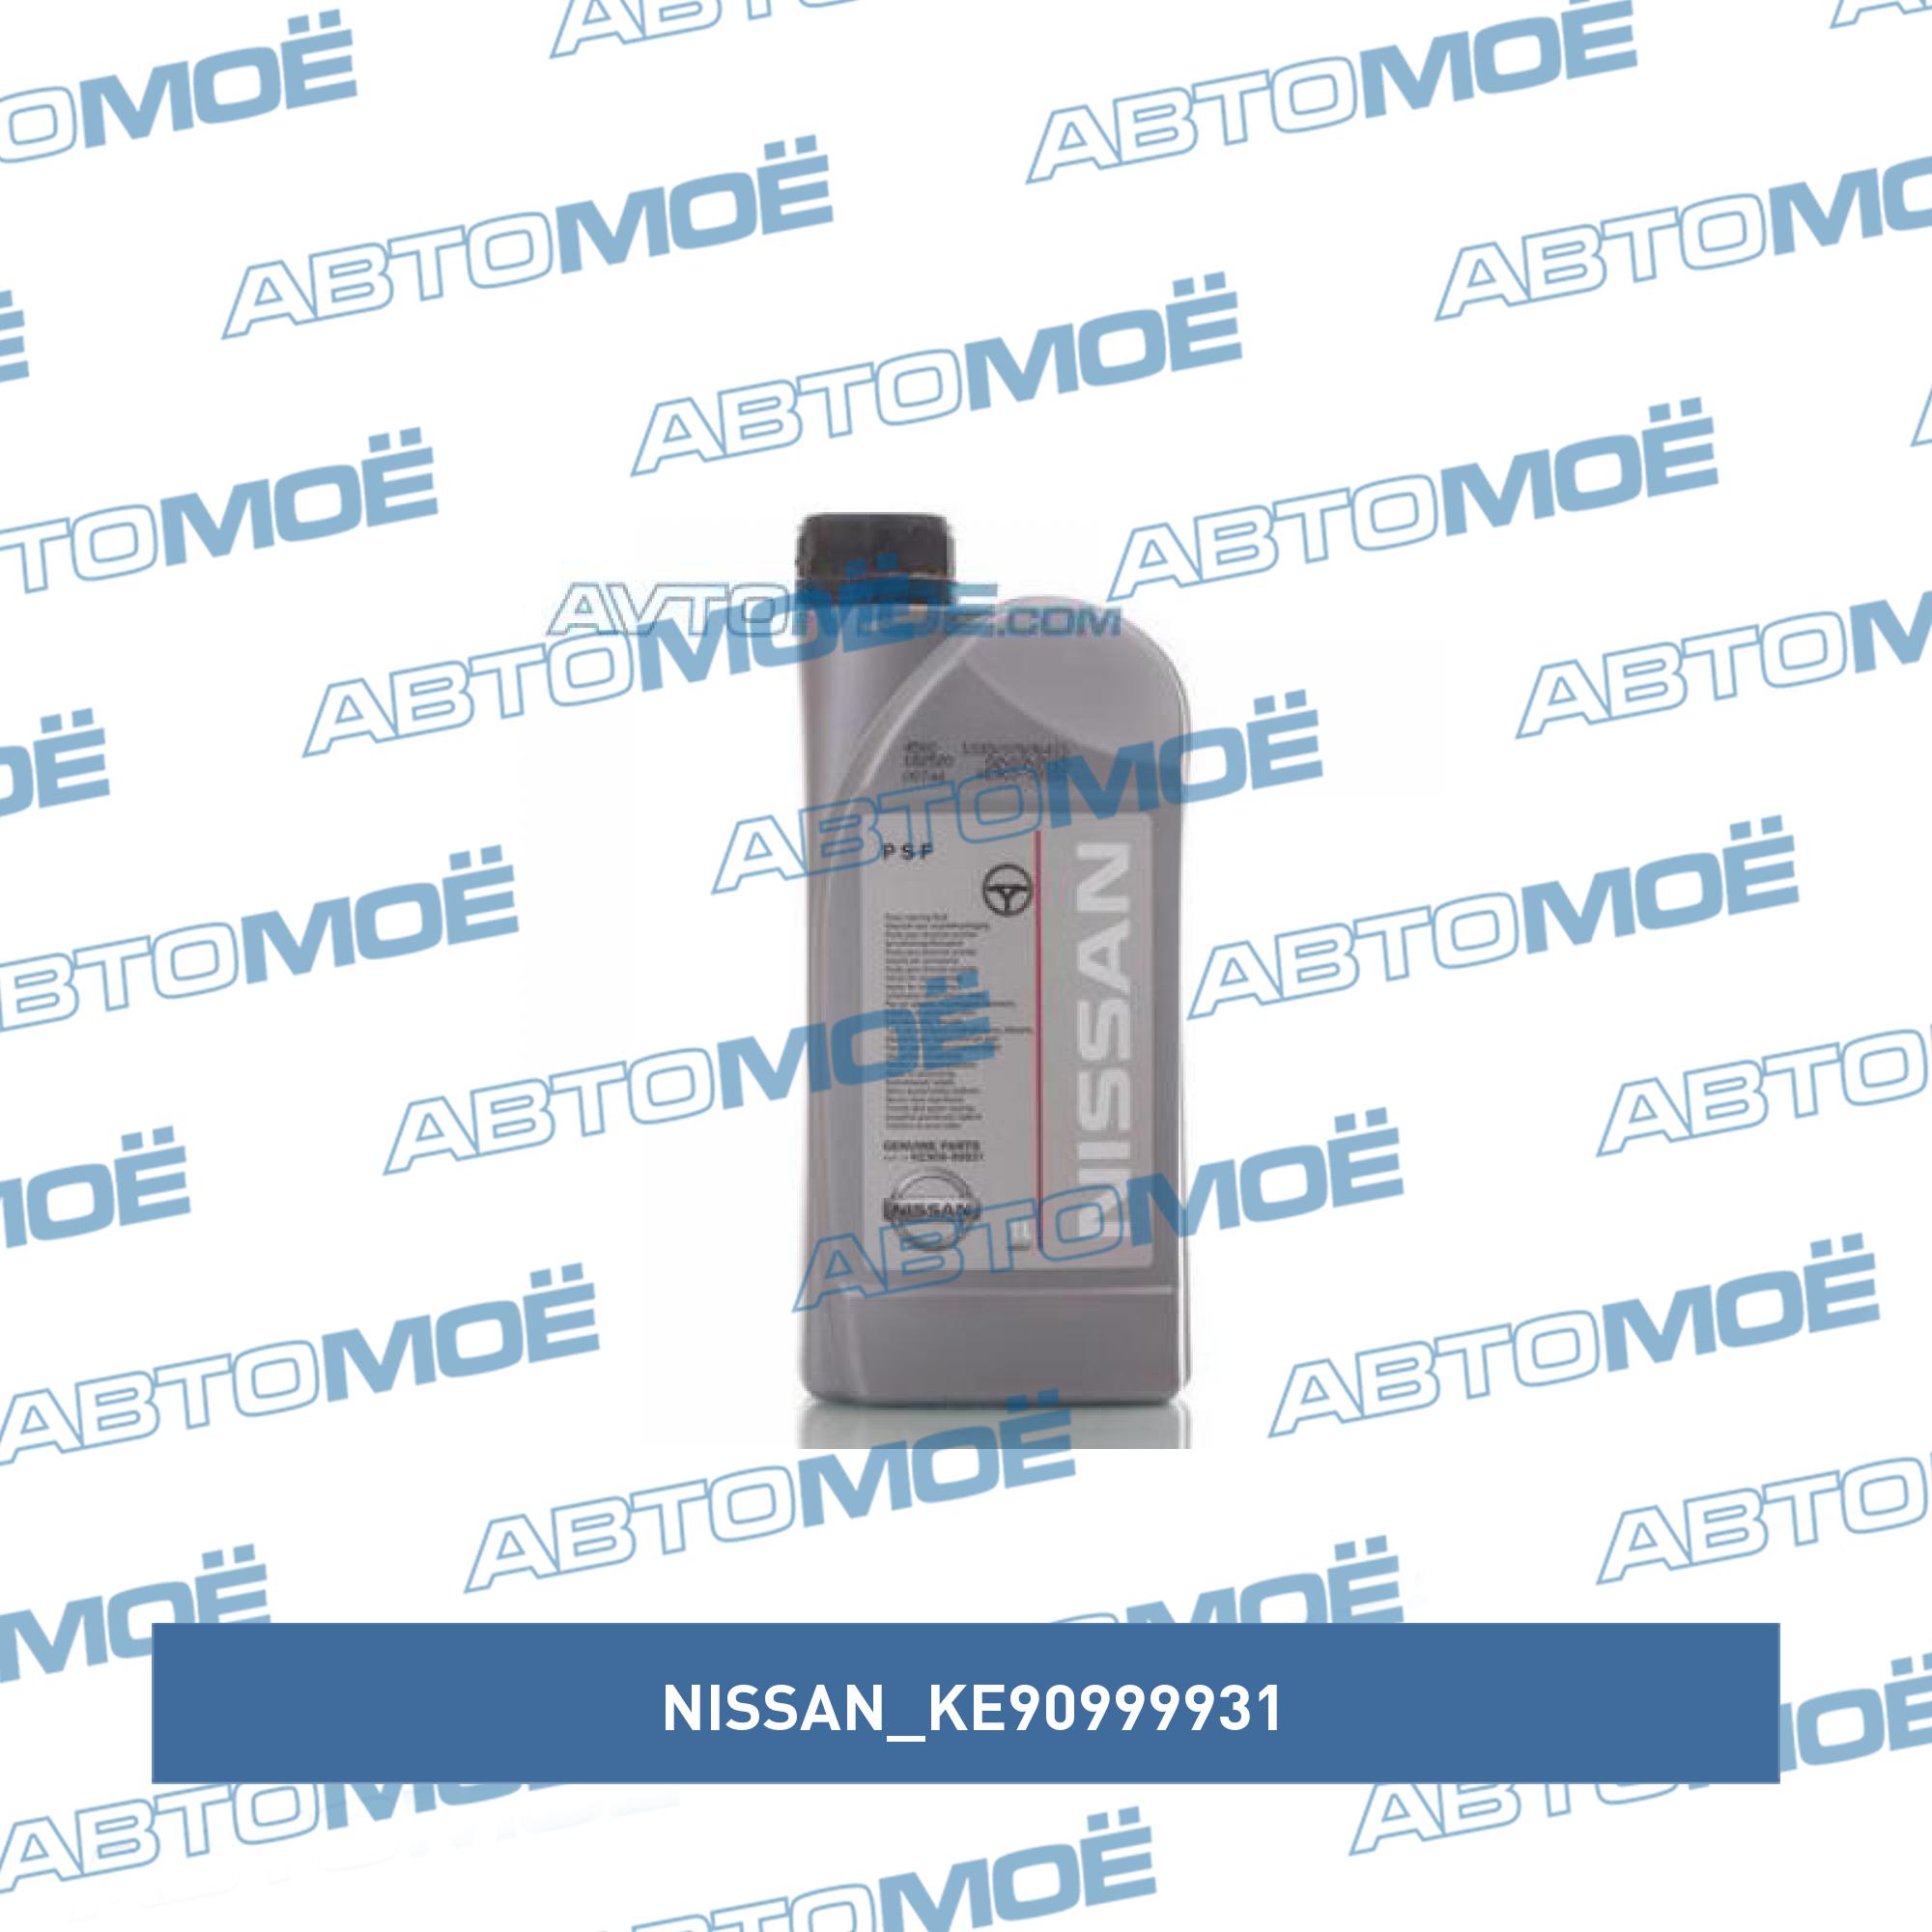 Жидкость гидроусилителя руля Nissan 1л NISSAN KE90999931